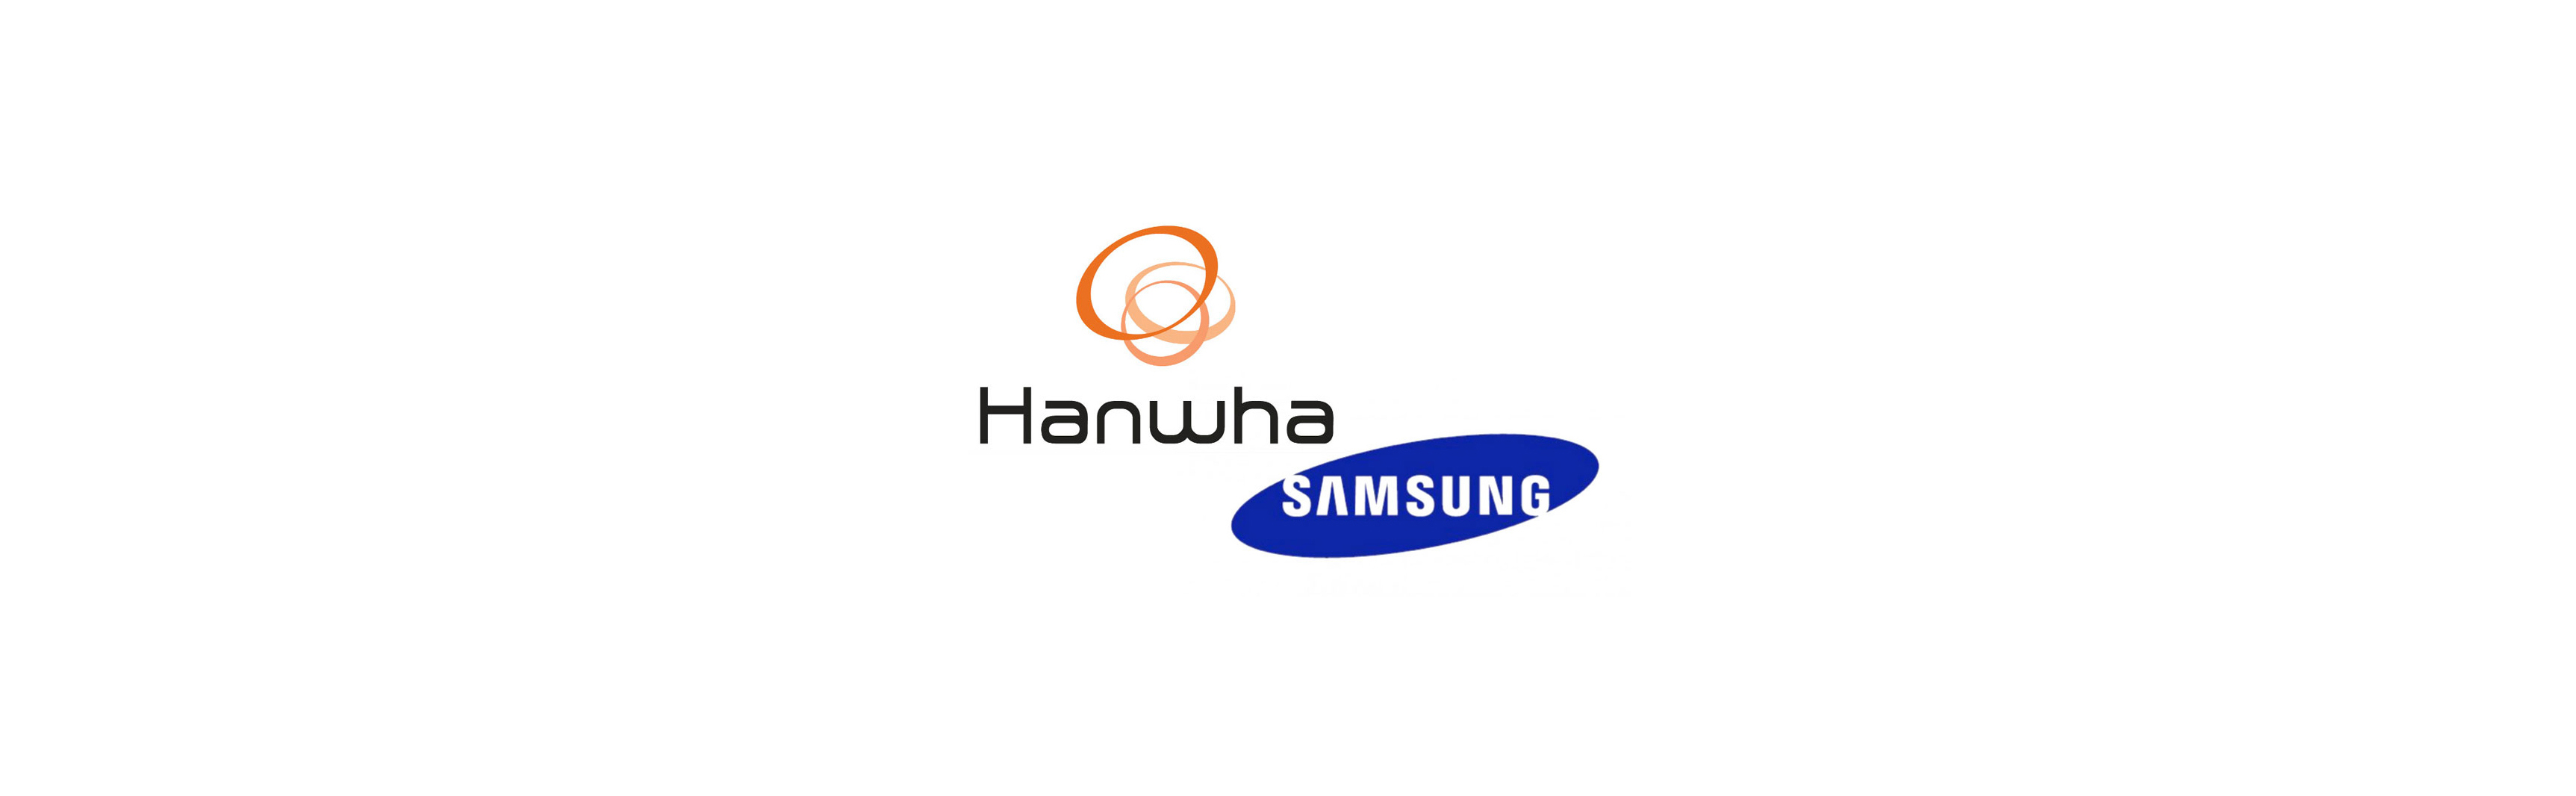 Hanwha Samsung logo